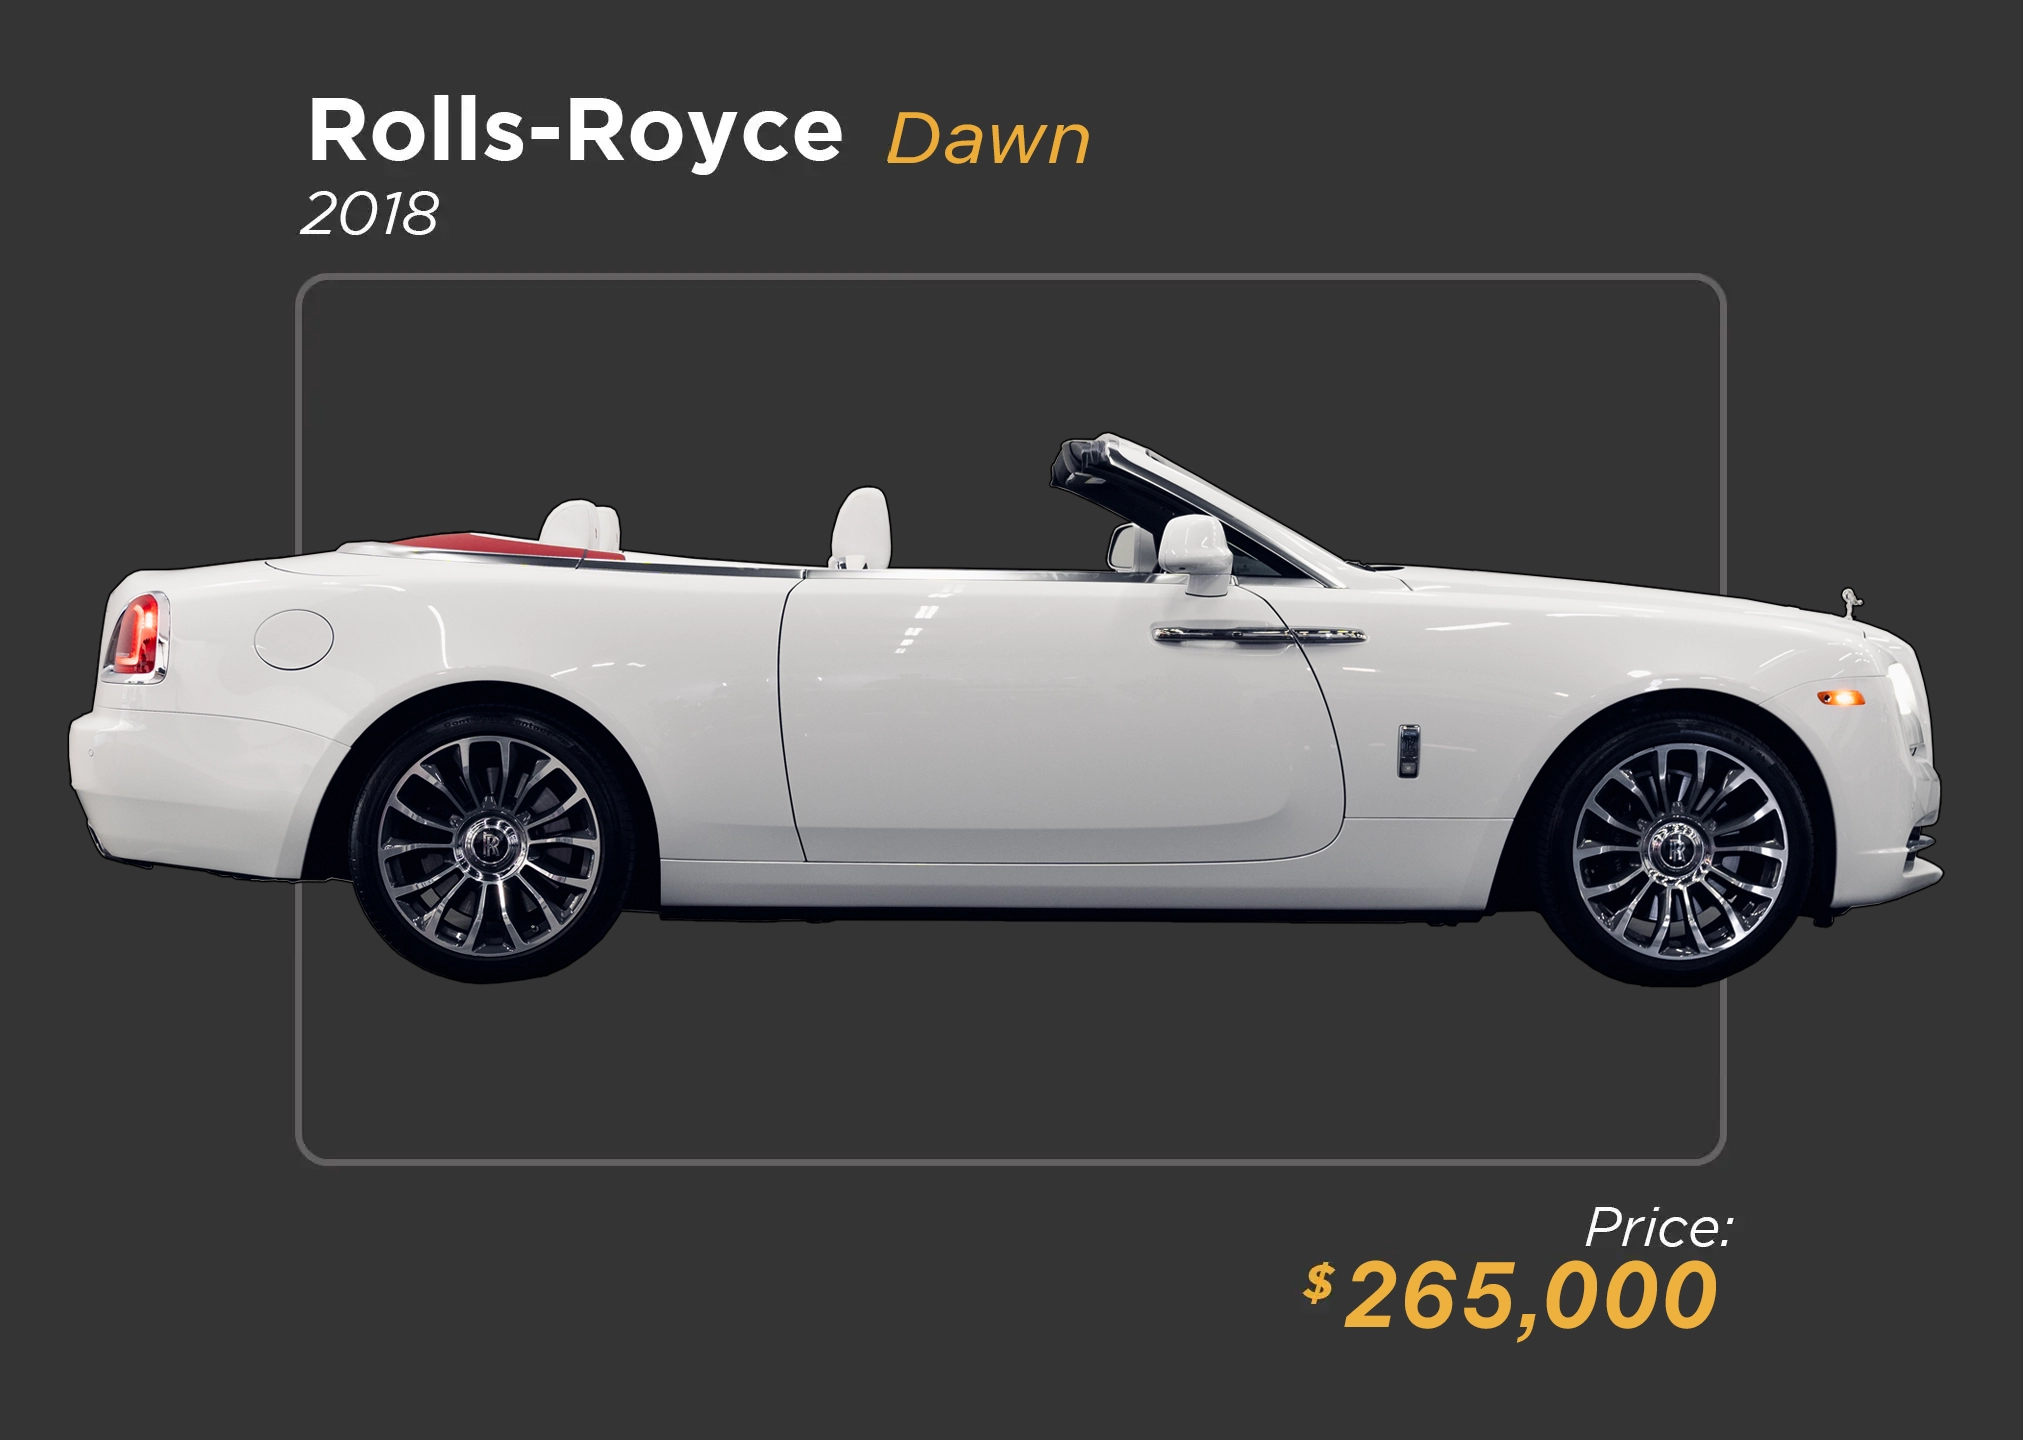 2018 white Royce Dawn for sale - mph club 215k